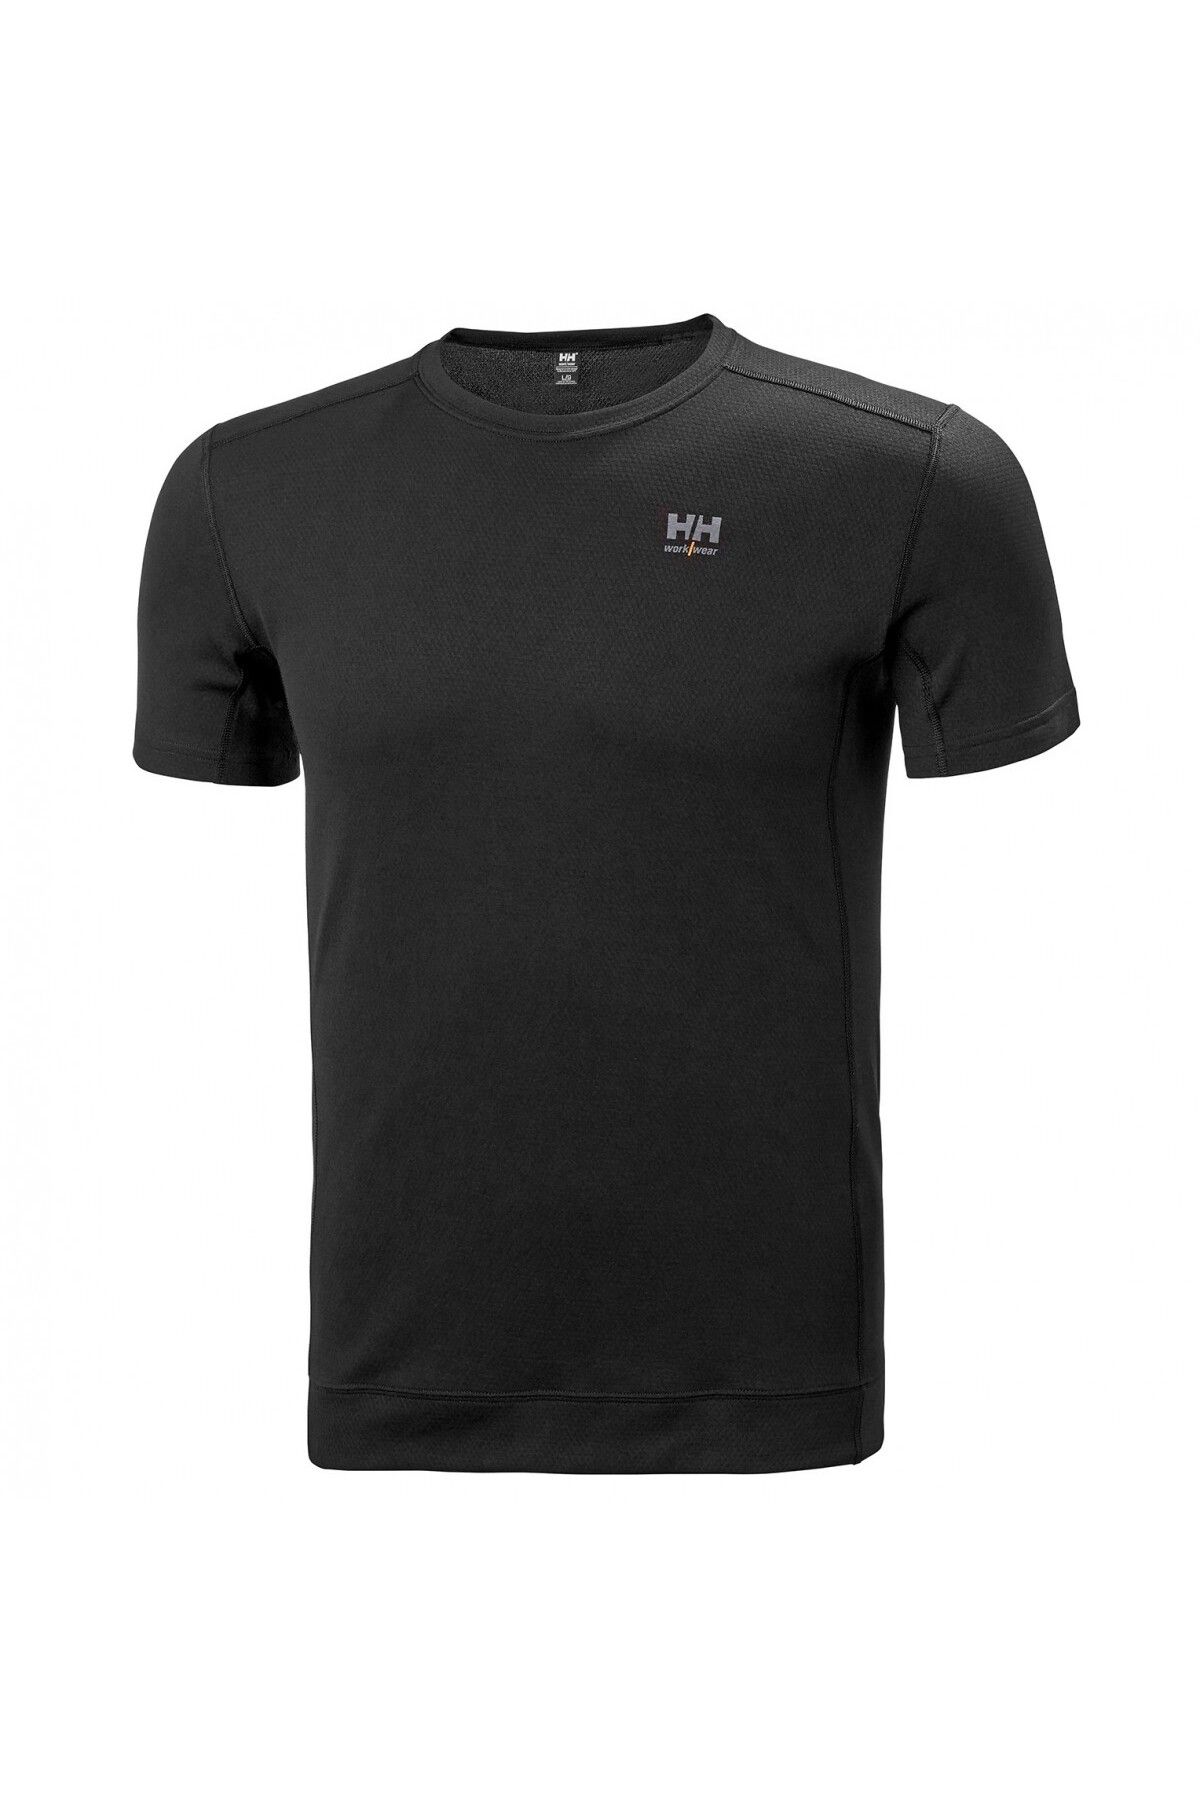 Helly Hansen Workwear Lıfa Tişört -75116